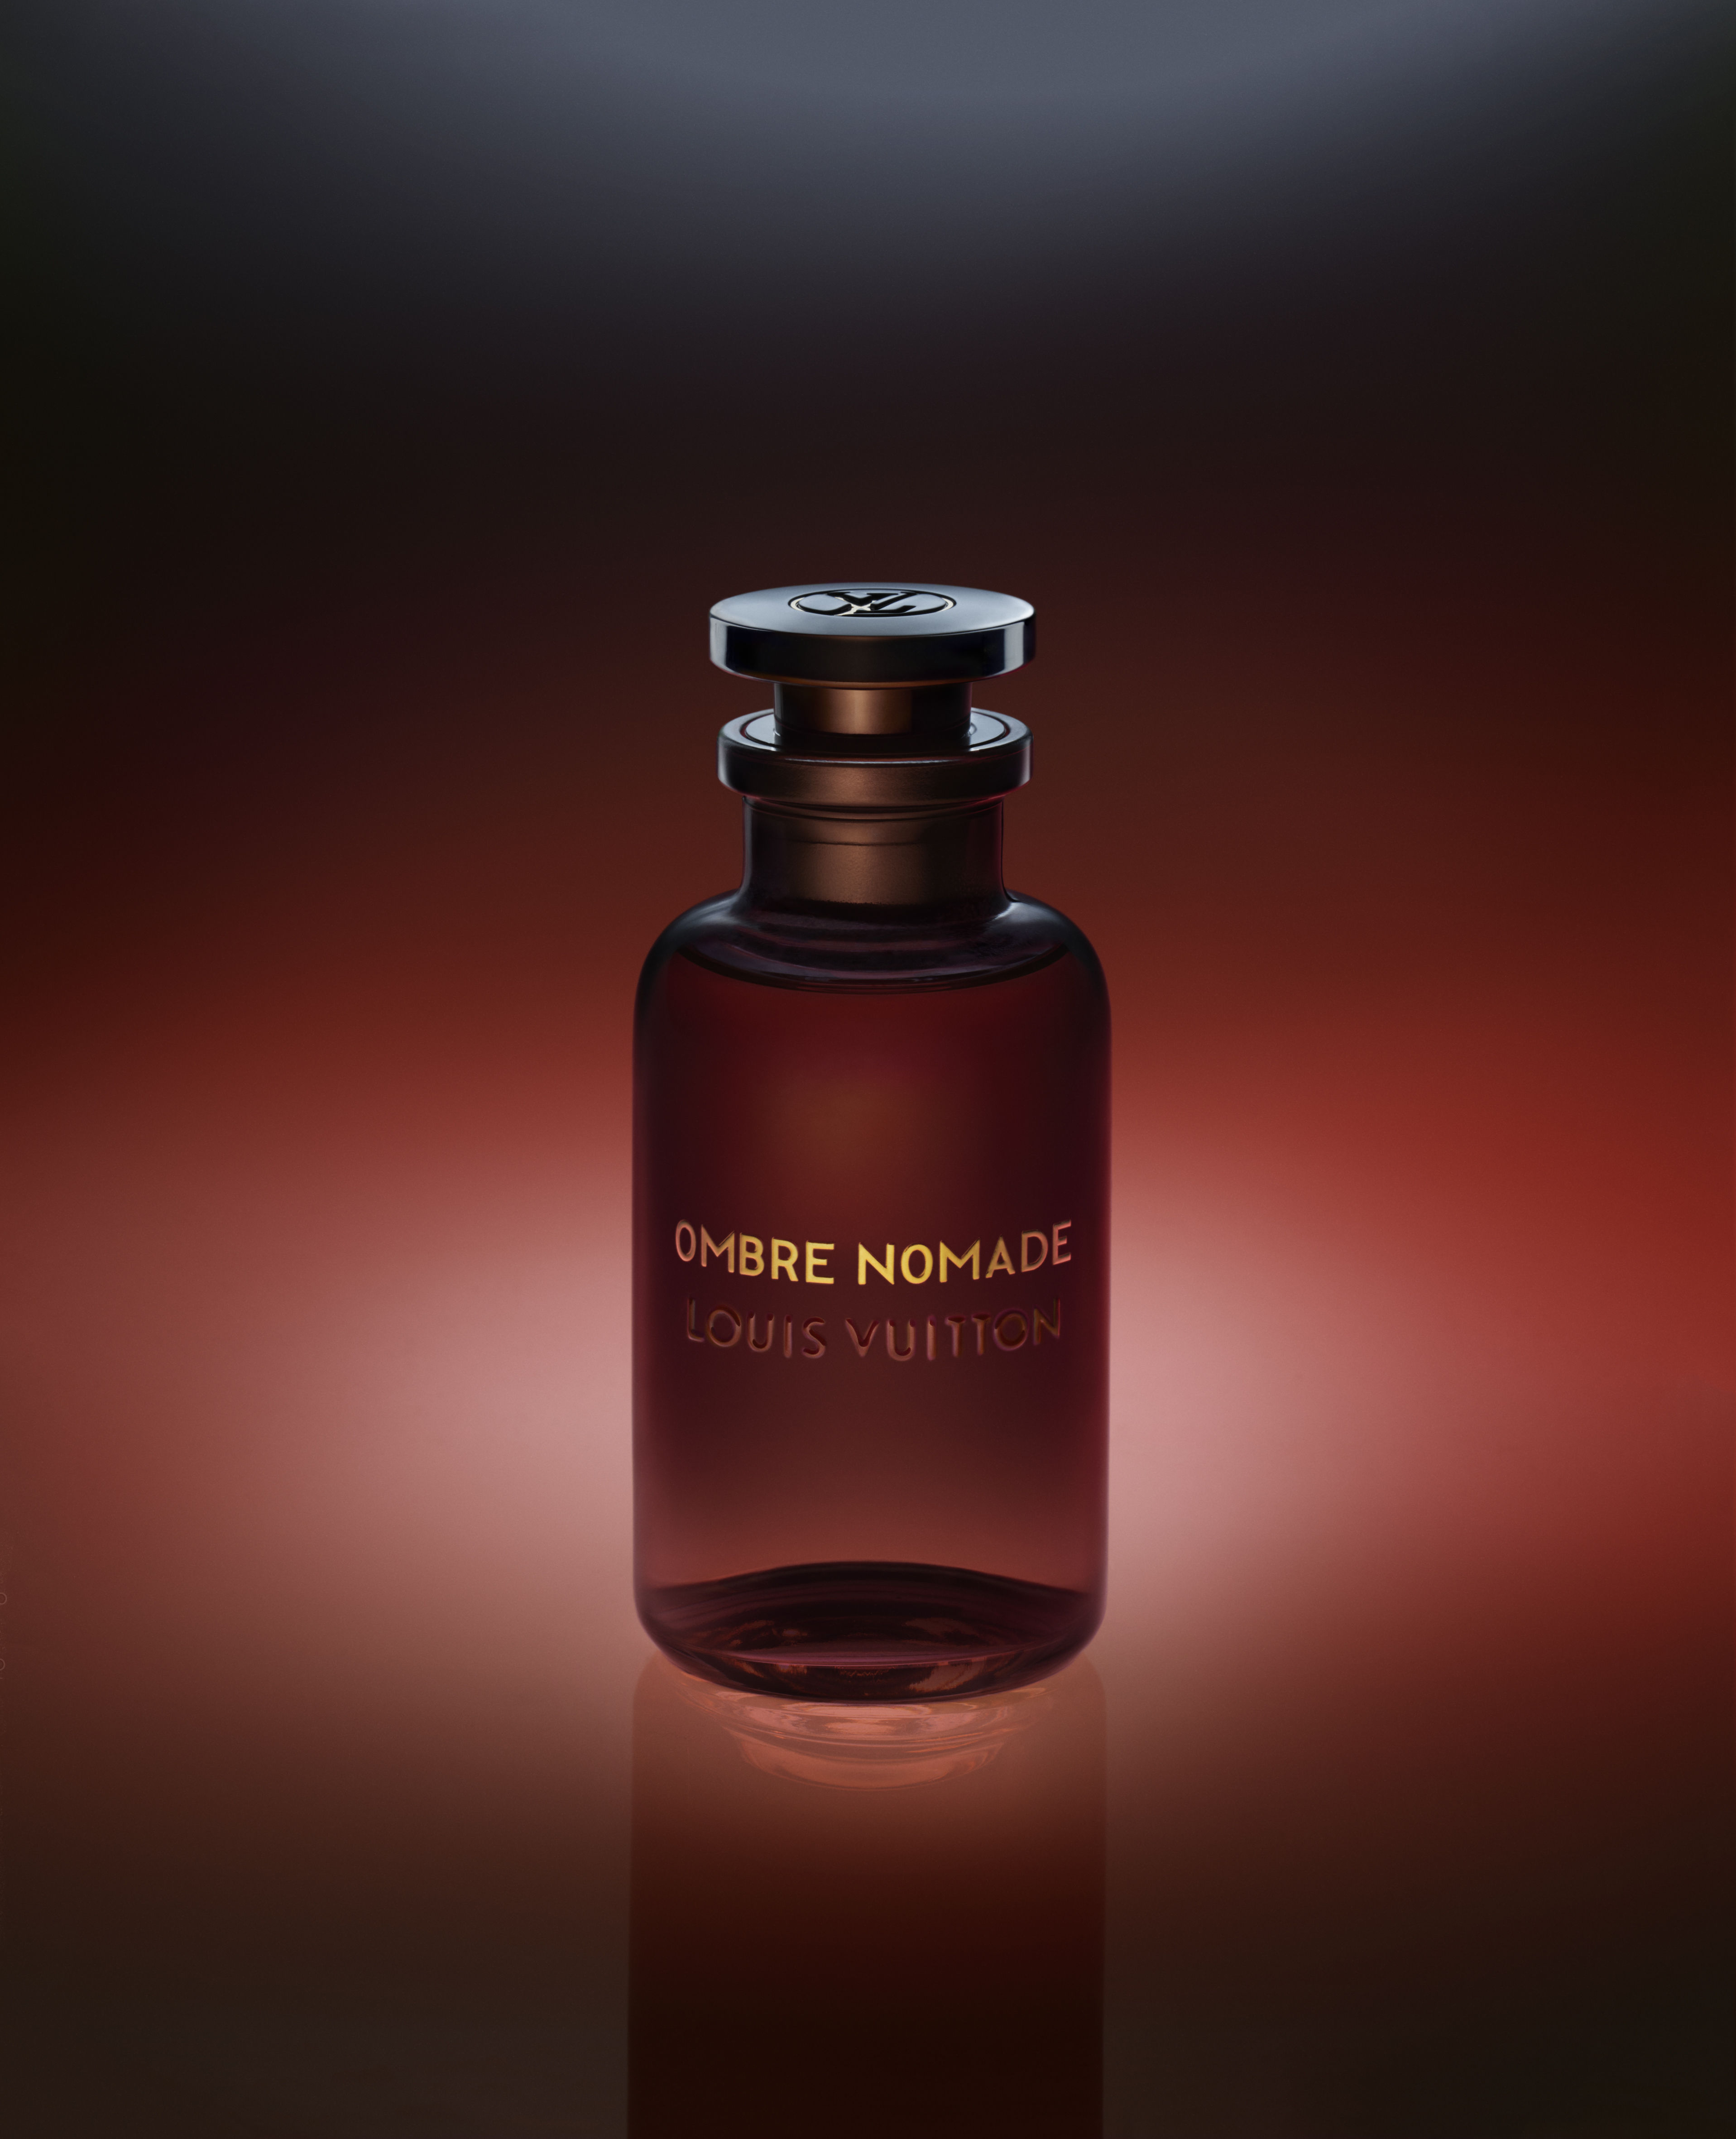 6 New Louis Vuitton’s Perfume for Men